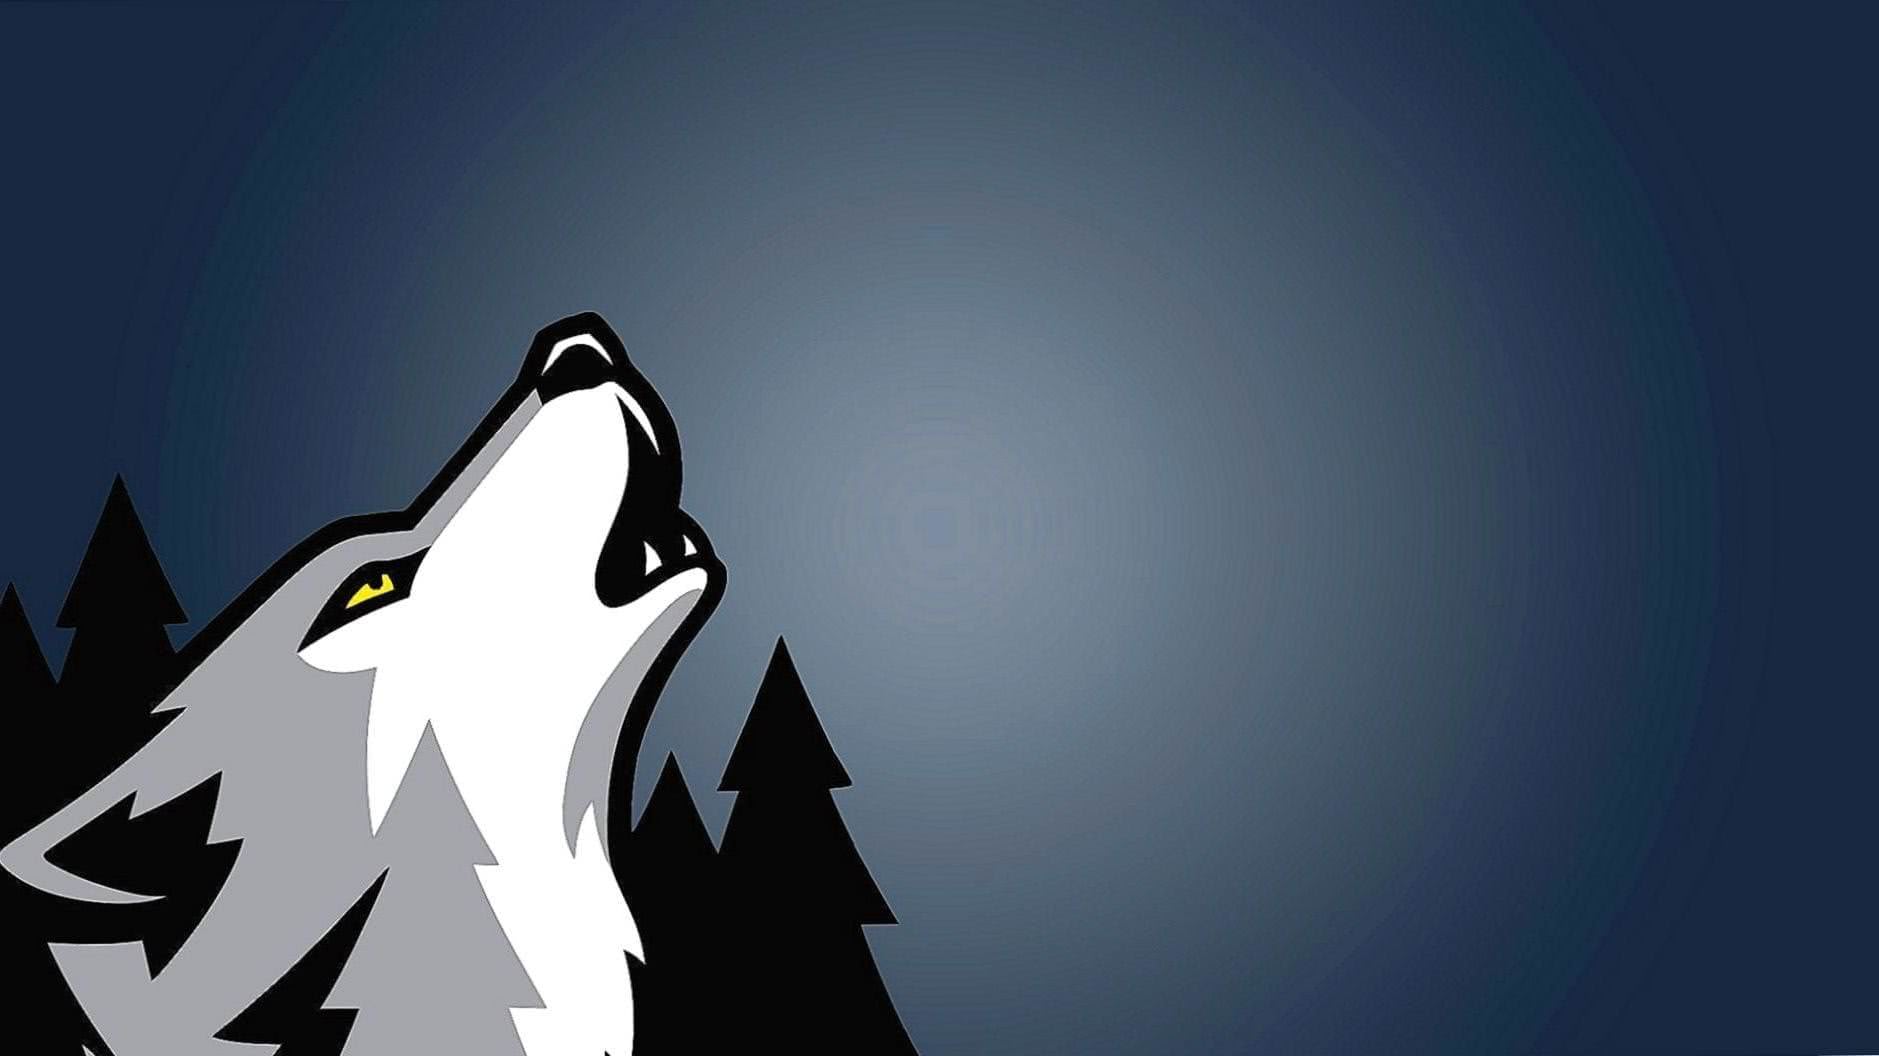 wolf logo hd wallpaper background image 2